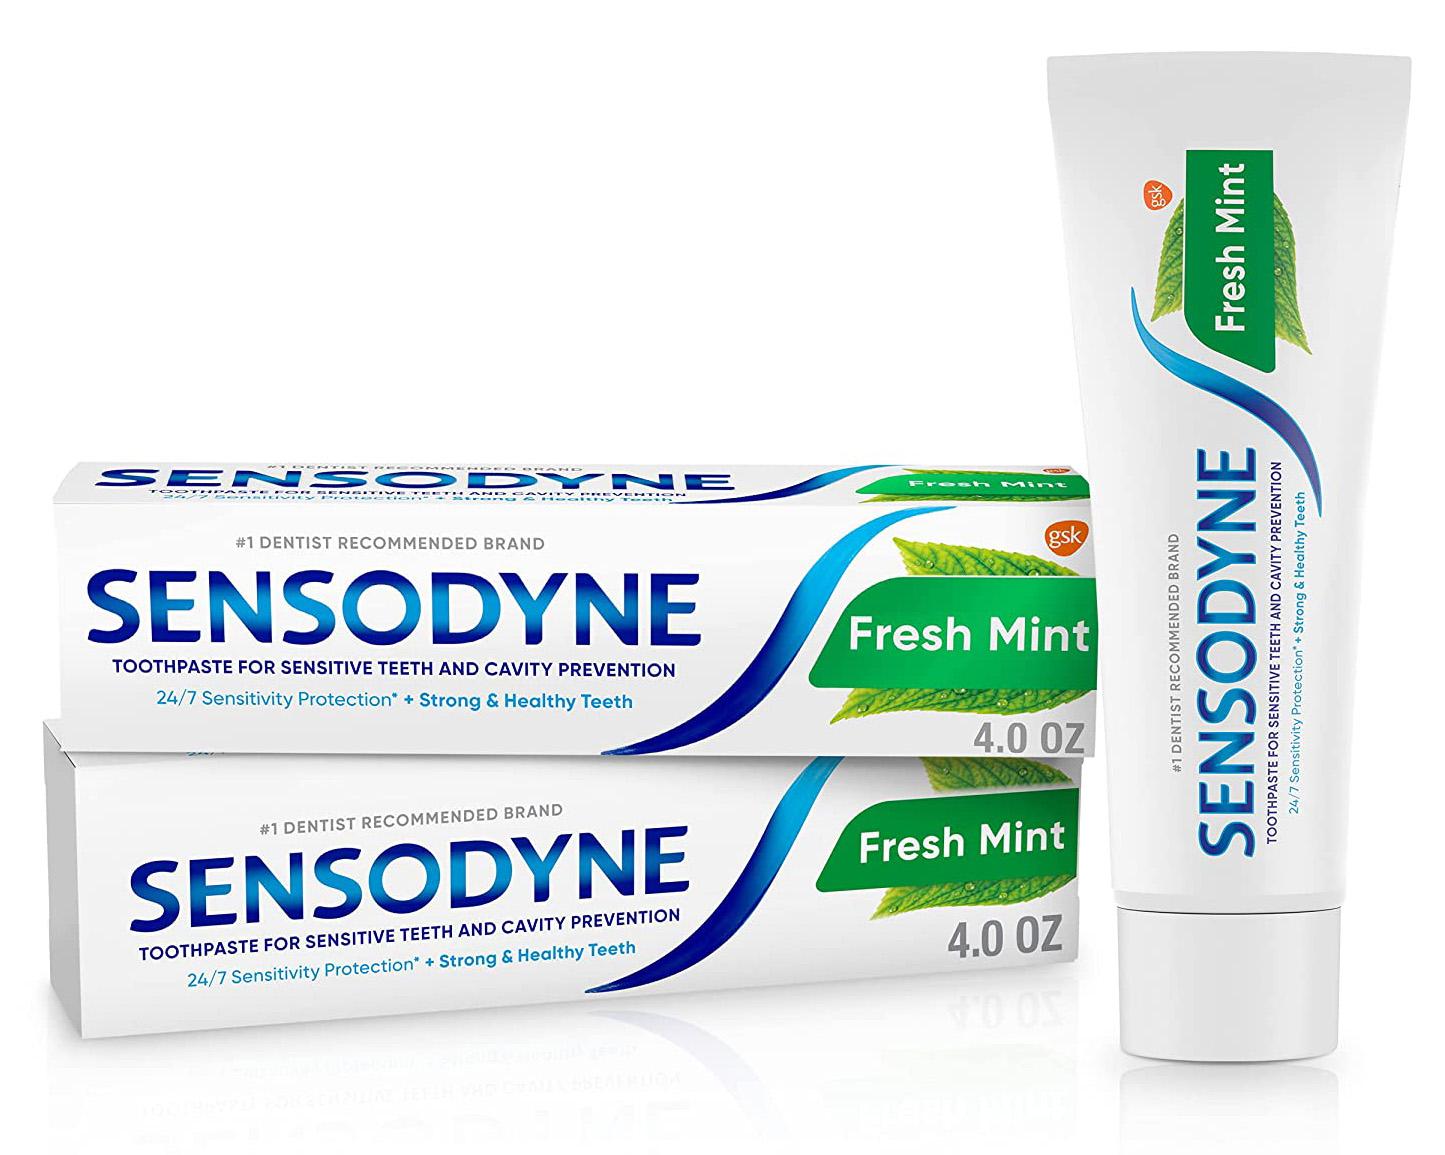 Sensodyne Pronamel Fresh Breath Enamel Toothpaste for $7.01 Shipped